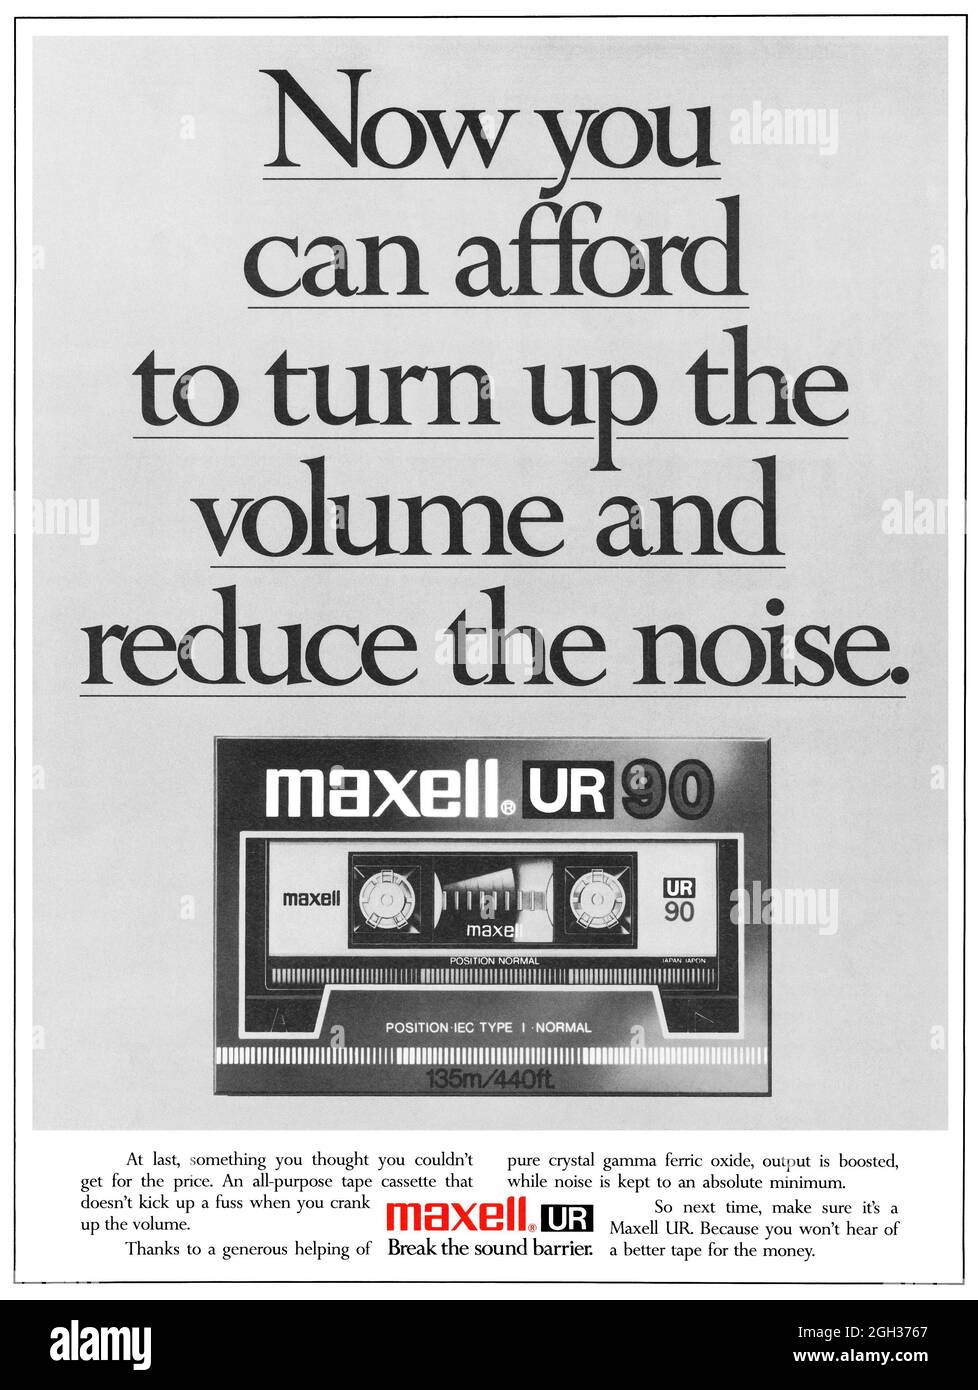 maxwell audio logo